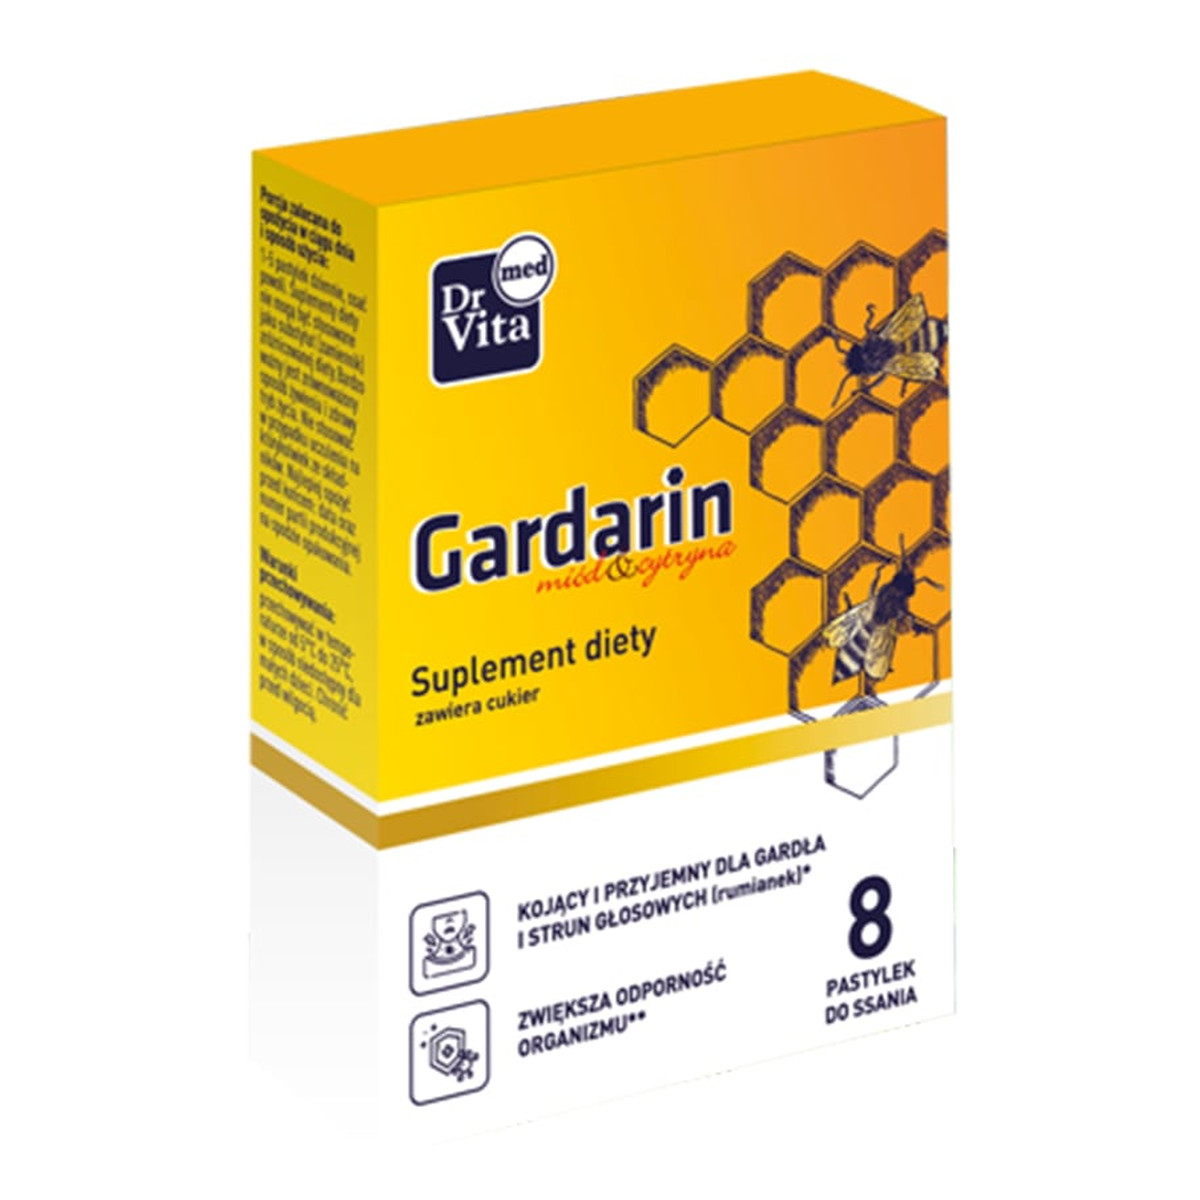 Dr Vita Gardarin miód & cytryna suplement diety 8 pastylek do ssania